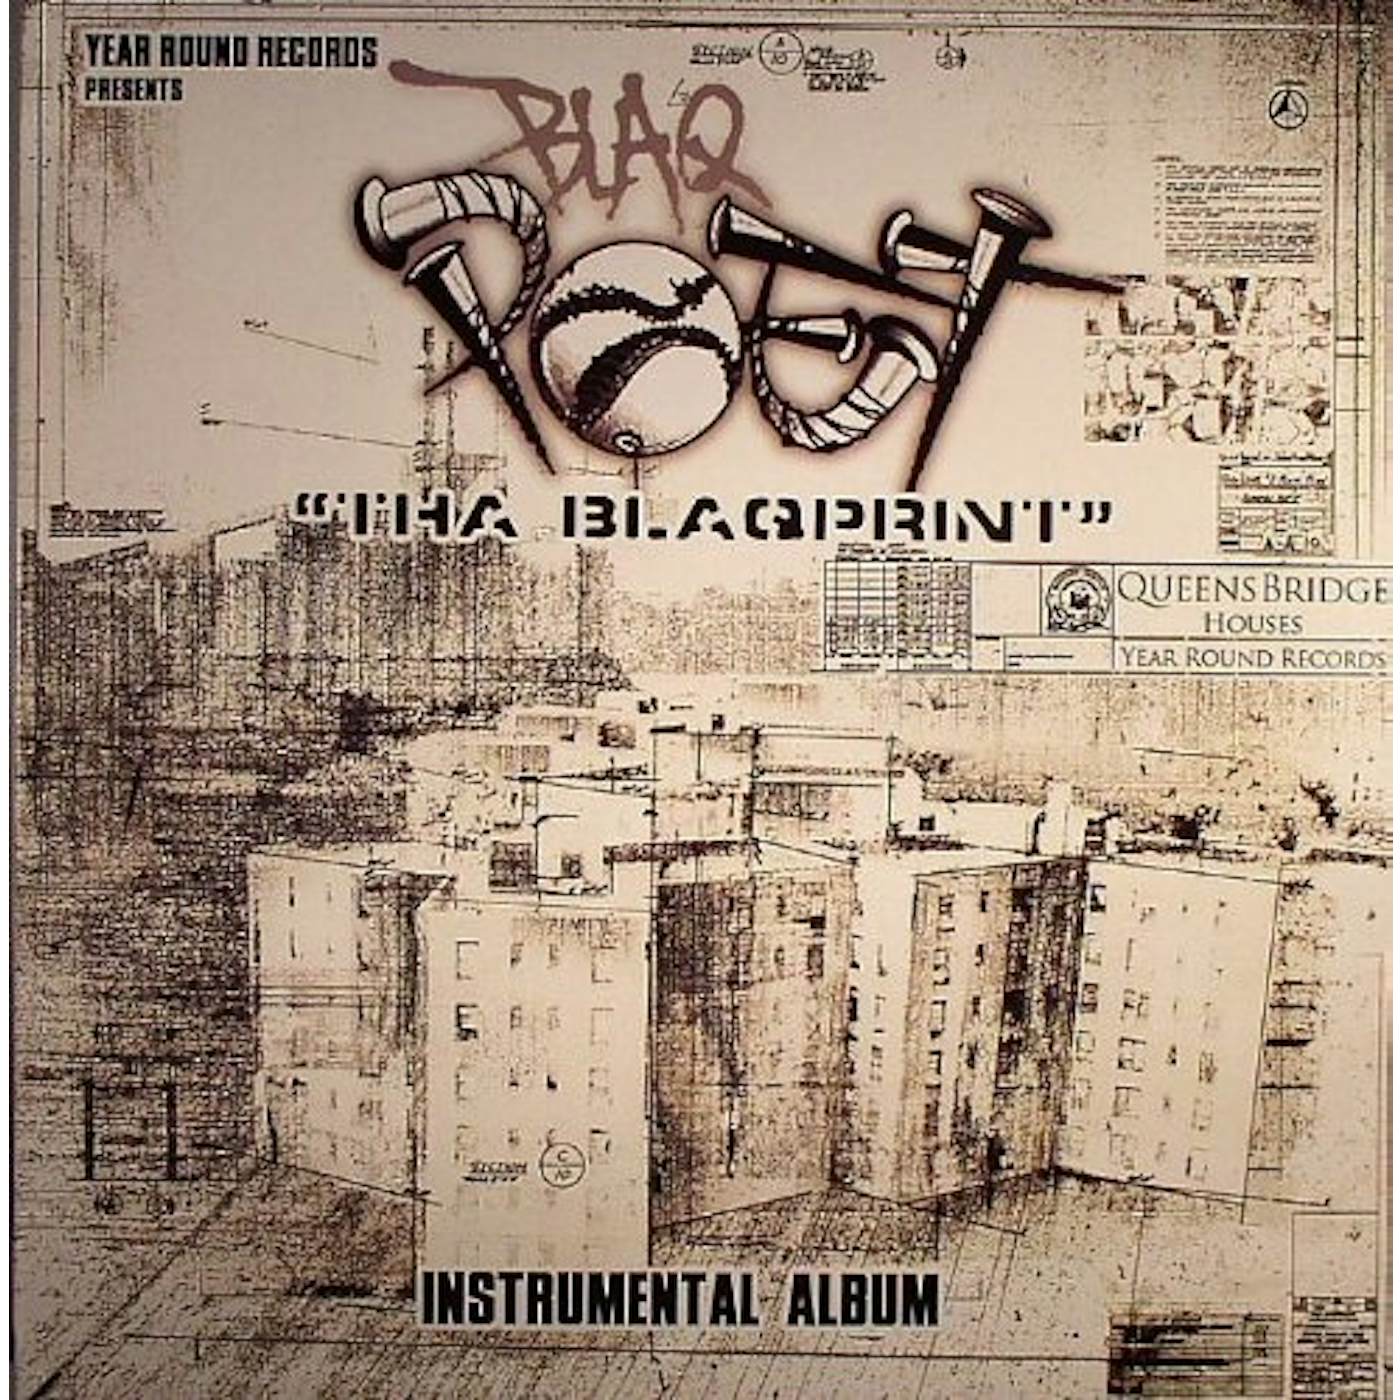 Blaq Poet & Dj Premier BLAQPRINT INSTRUMENTALS Vinyl Record